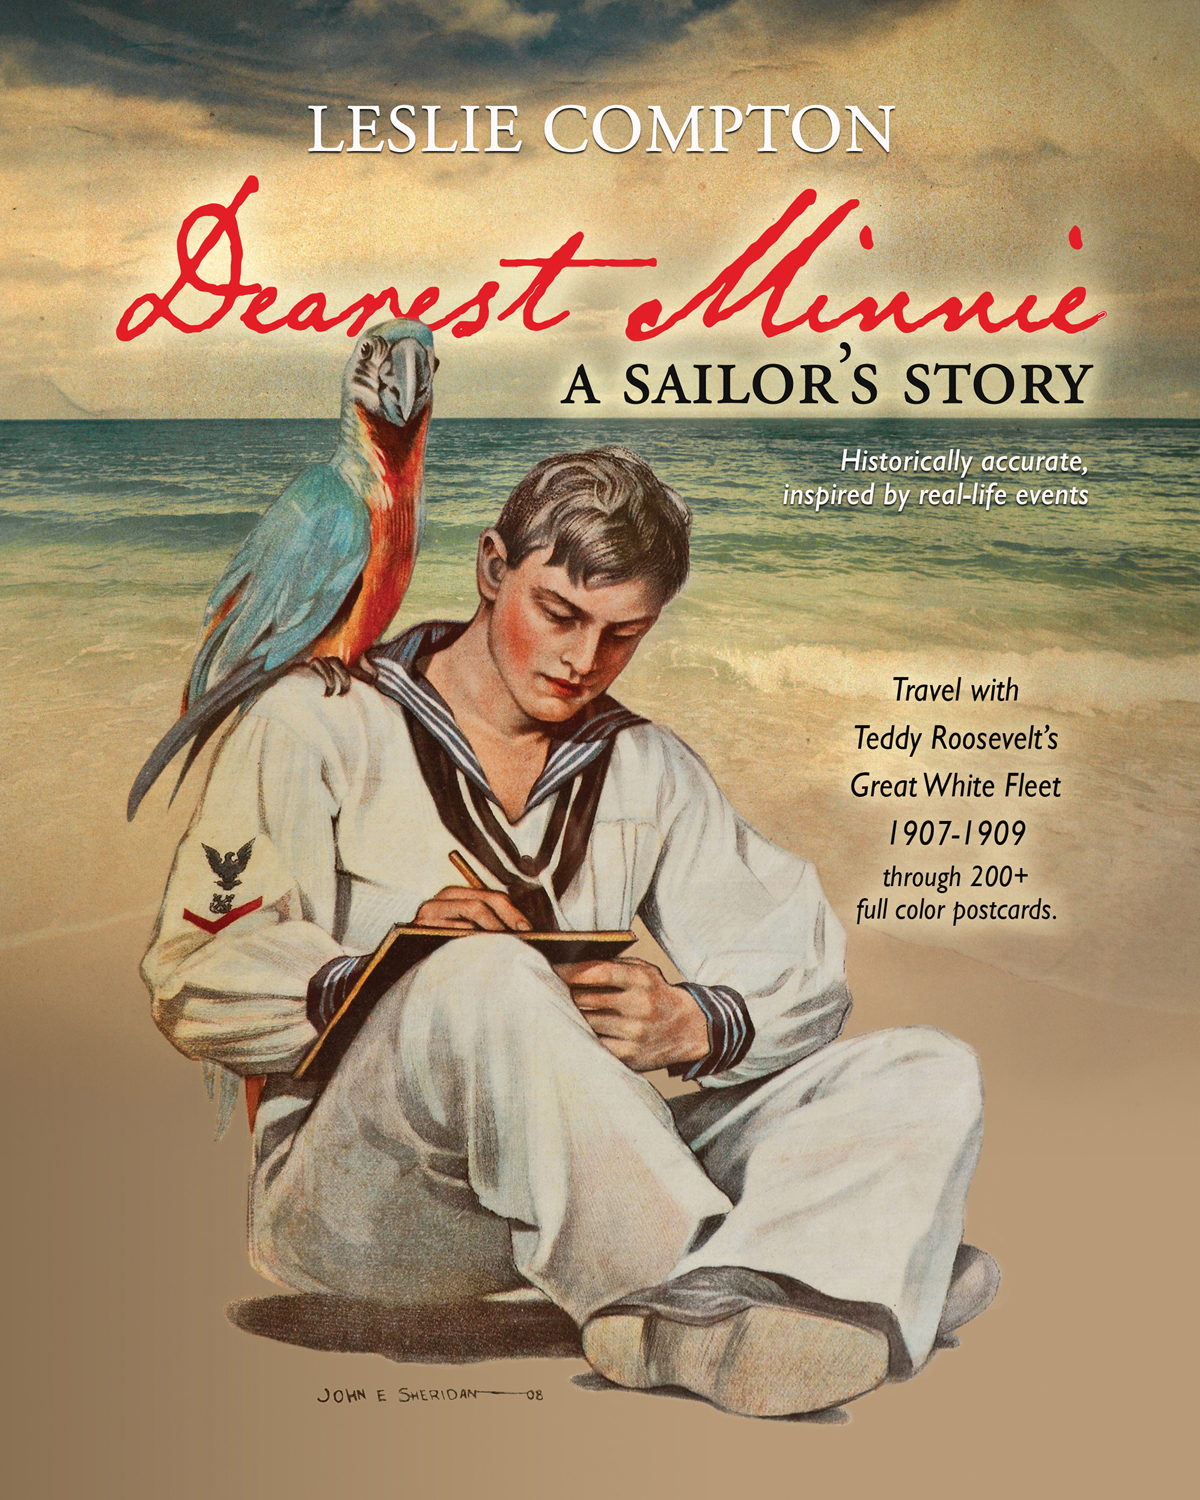 "Dearest Minnie, a Sailor's Story" by Leslie Compton